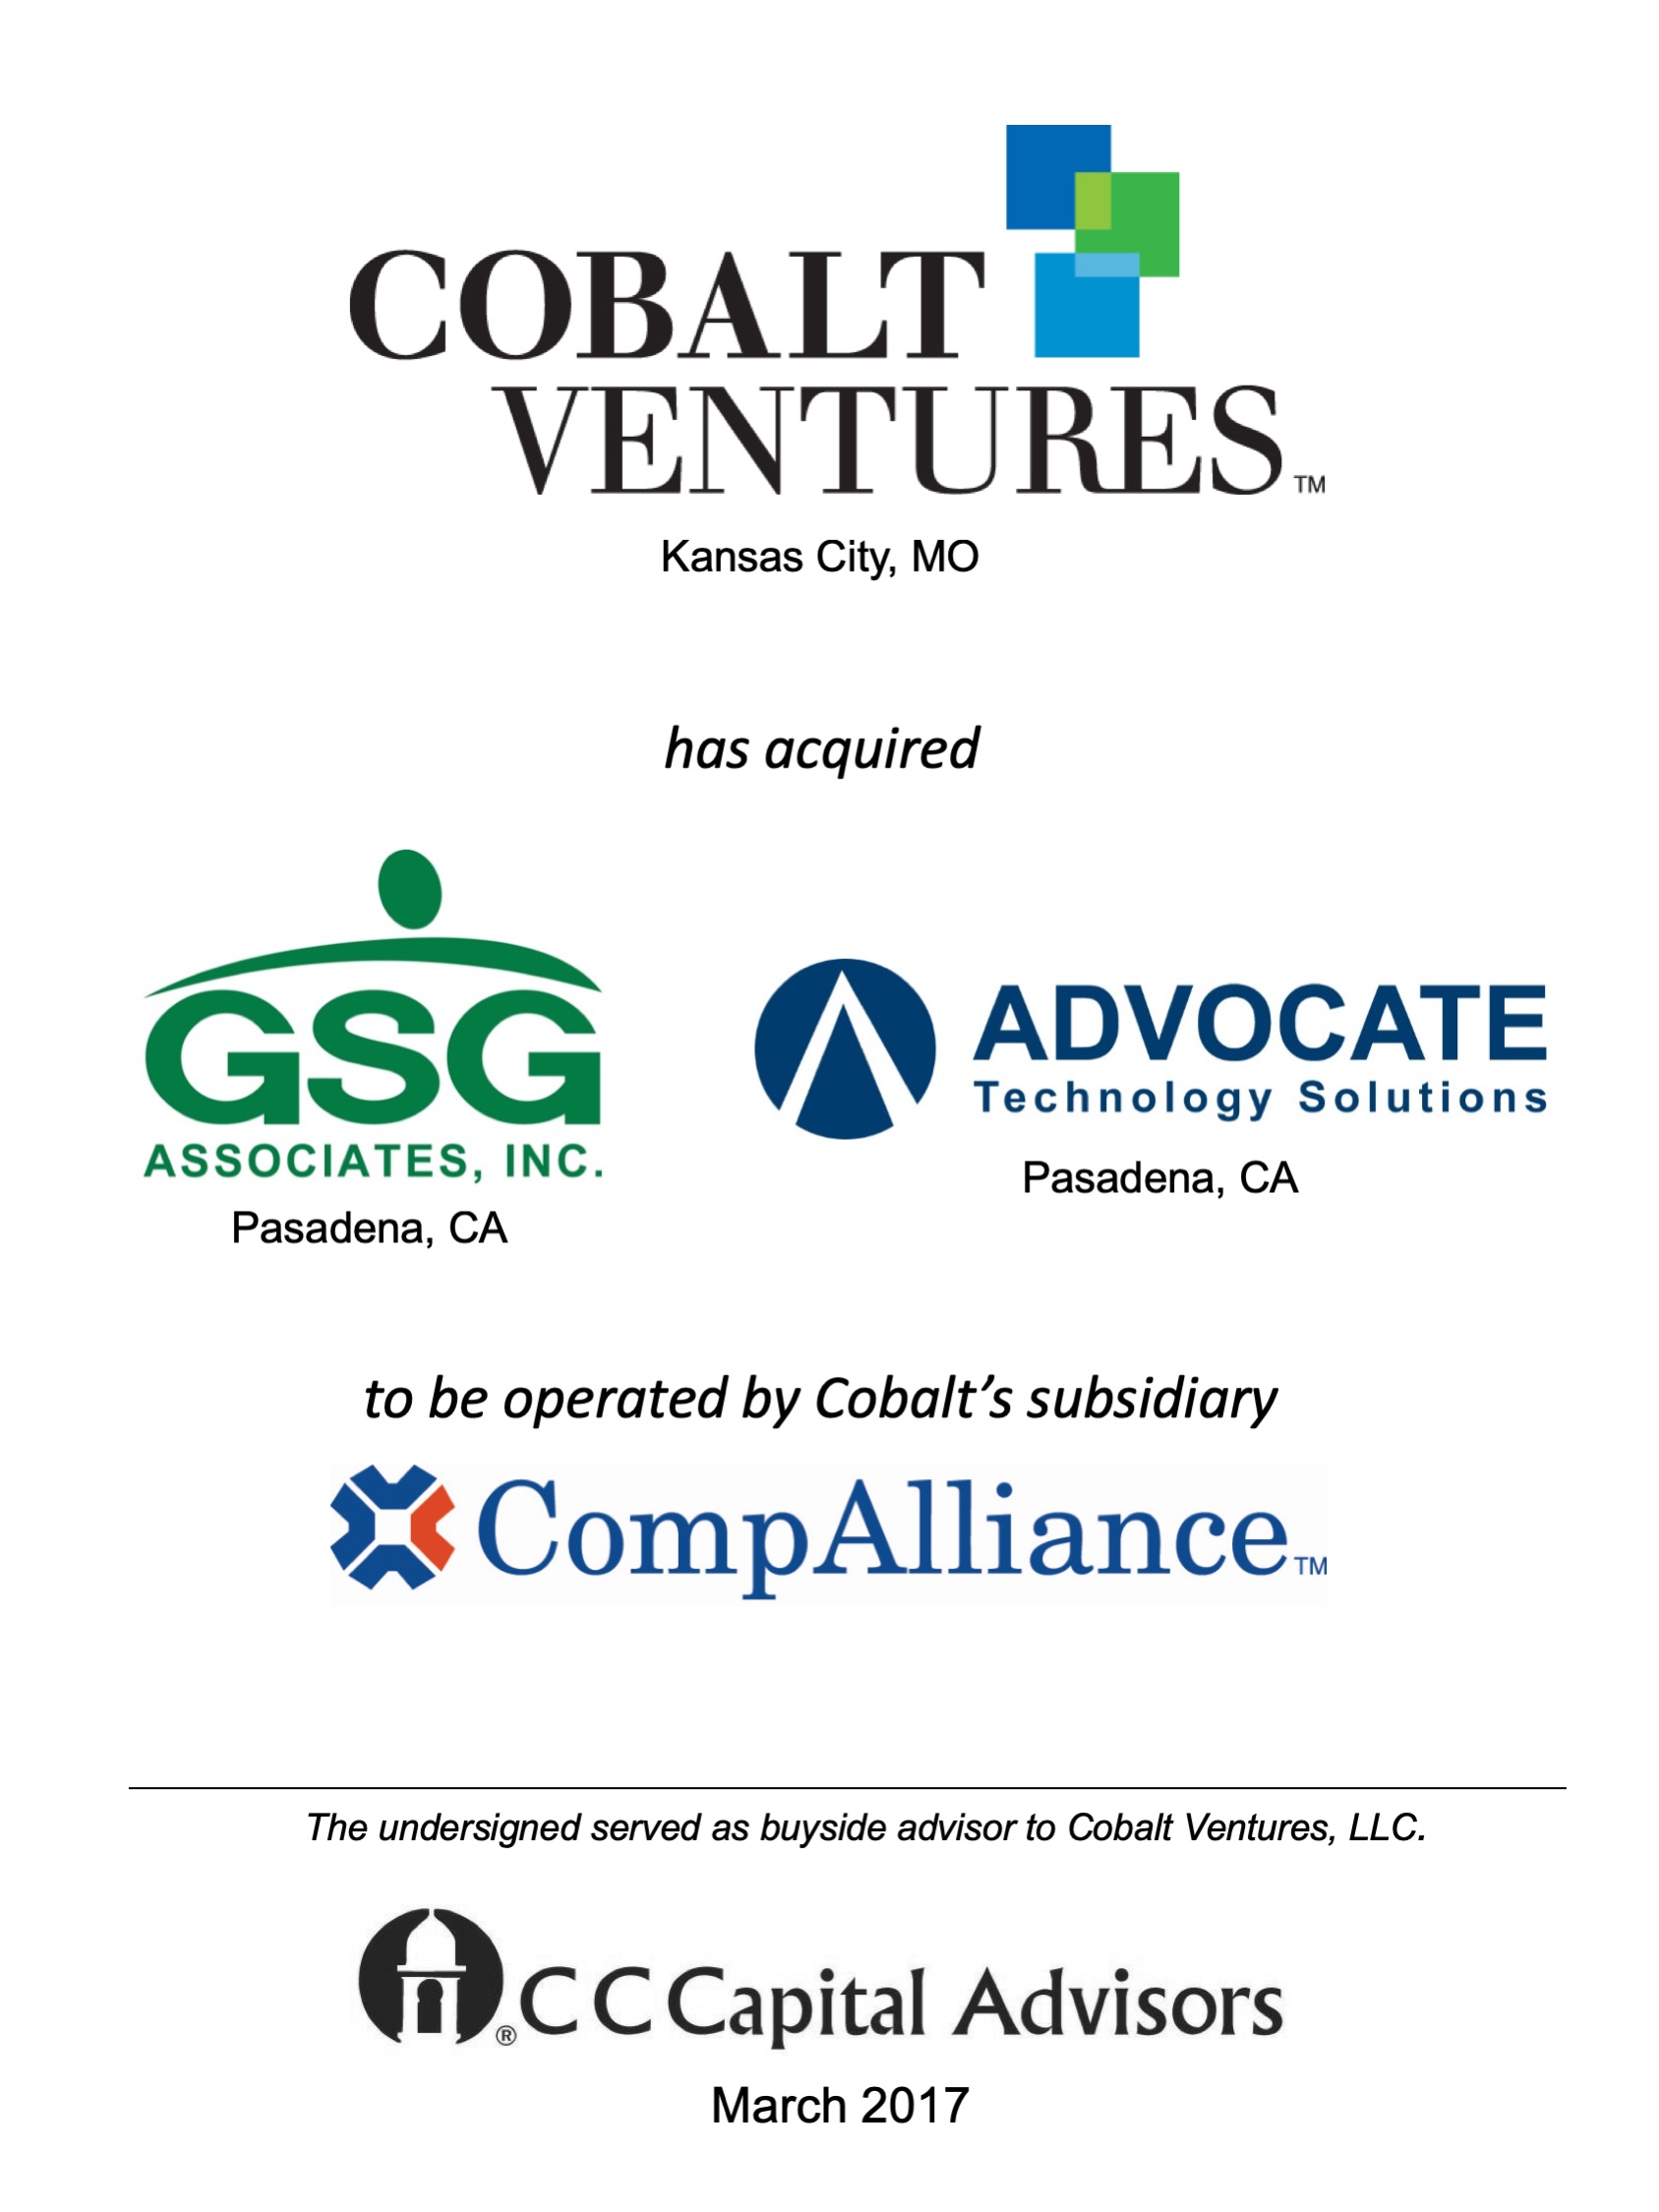 Colbalt Ventures transaction